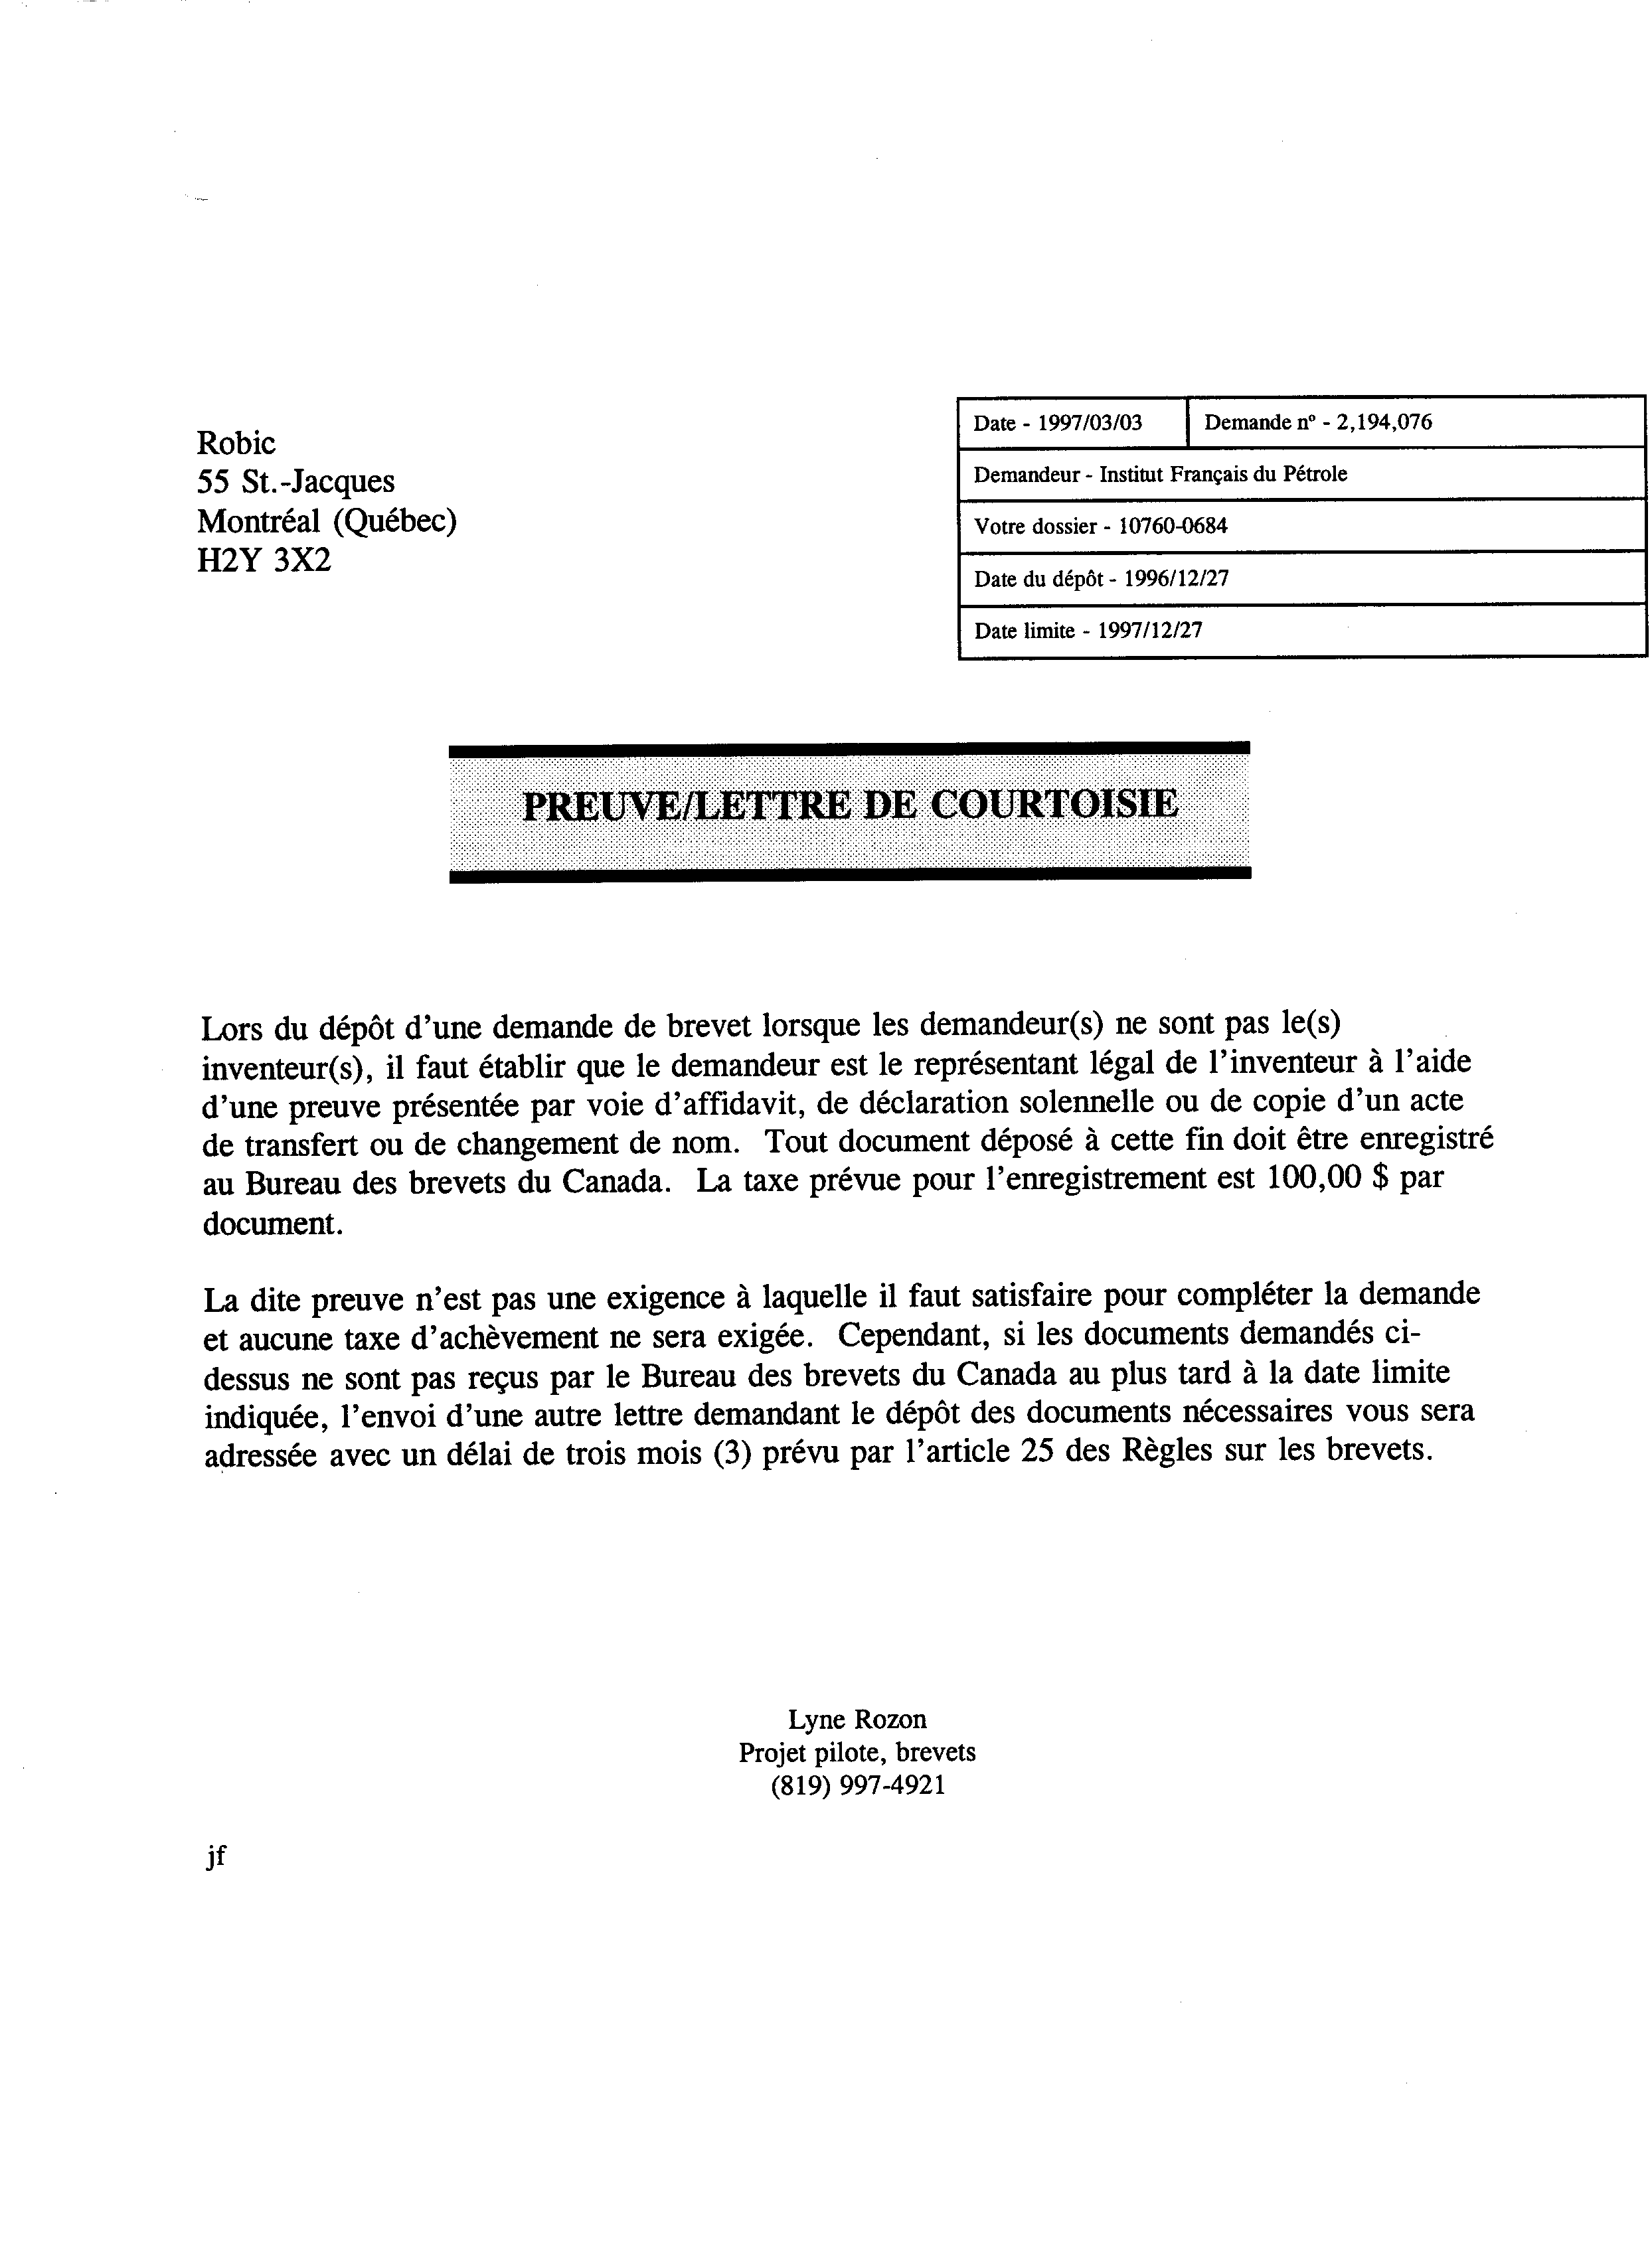 Canadian Patent Document 2194076. Correspondence 19961203. Image 1 of 1